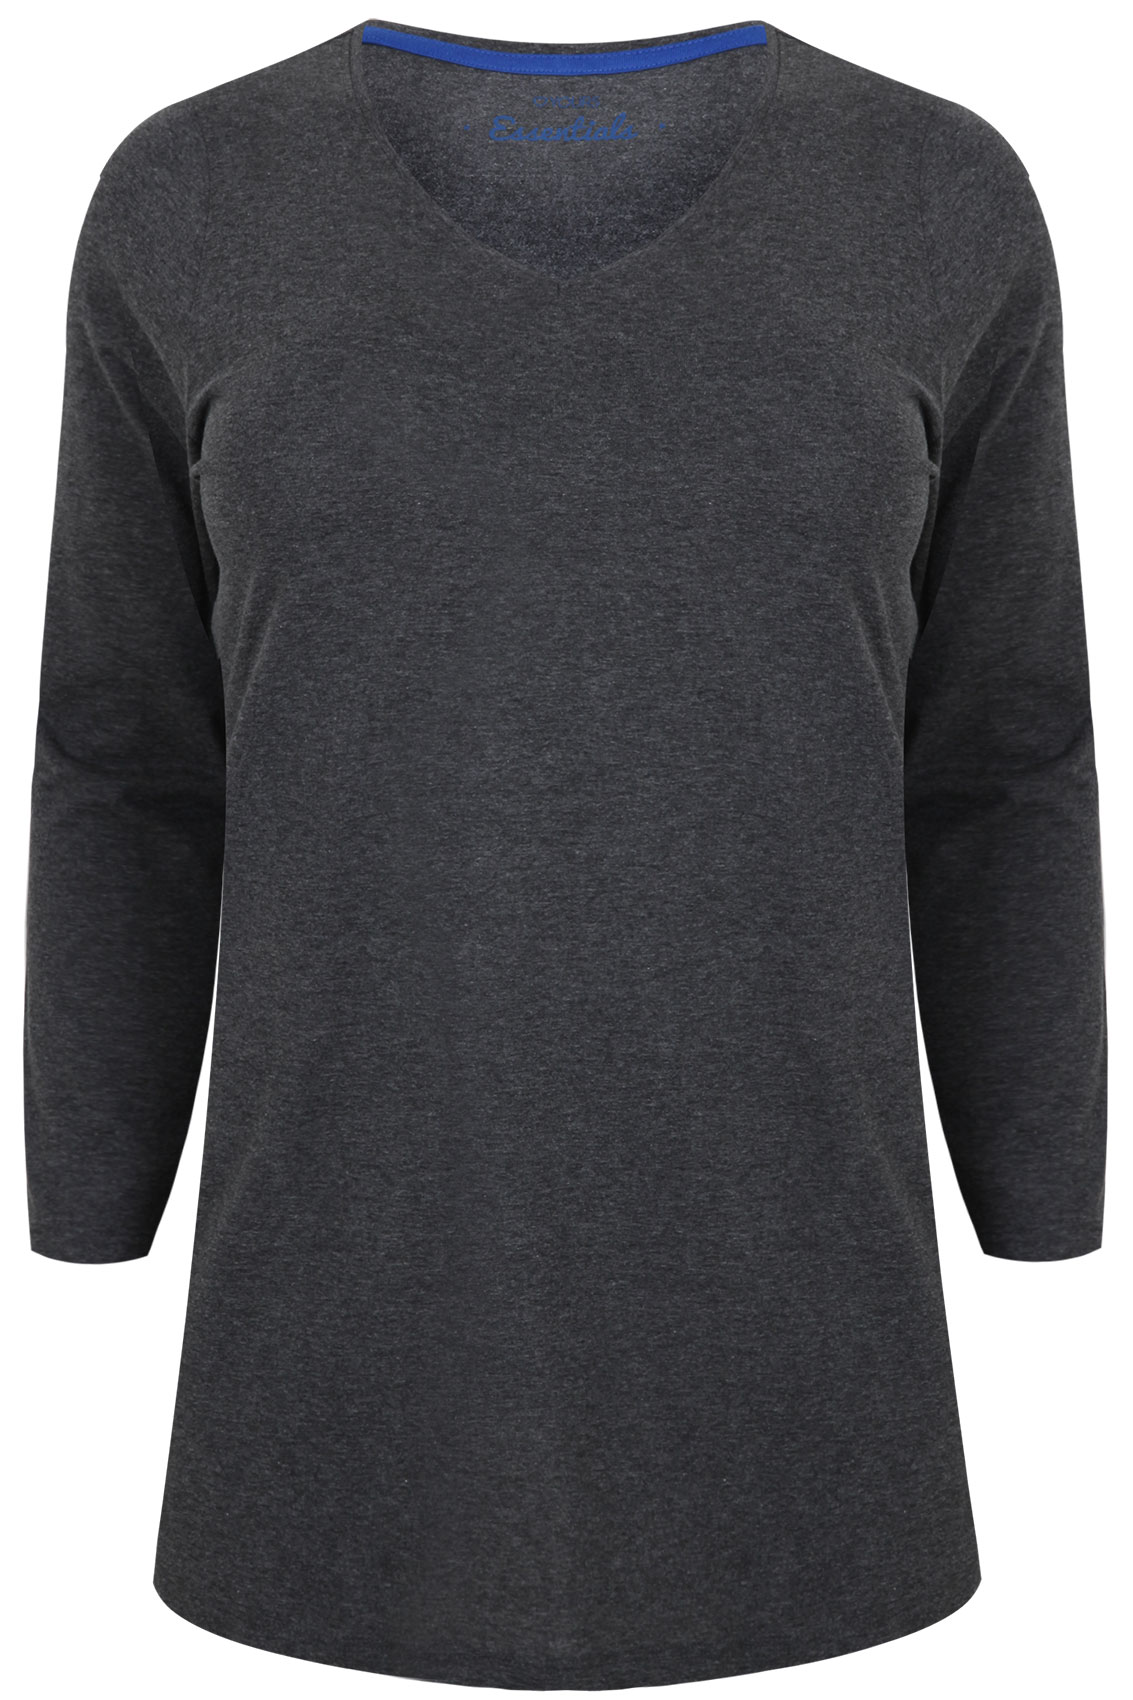 Grey Marl Long Sleeve V-Neck Plain T-Shirt Plus Size 16 to 36